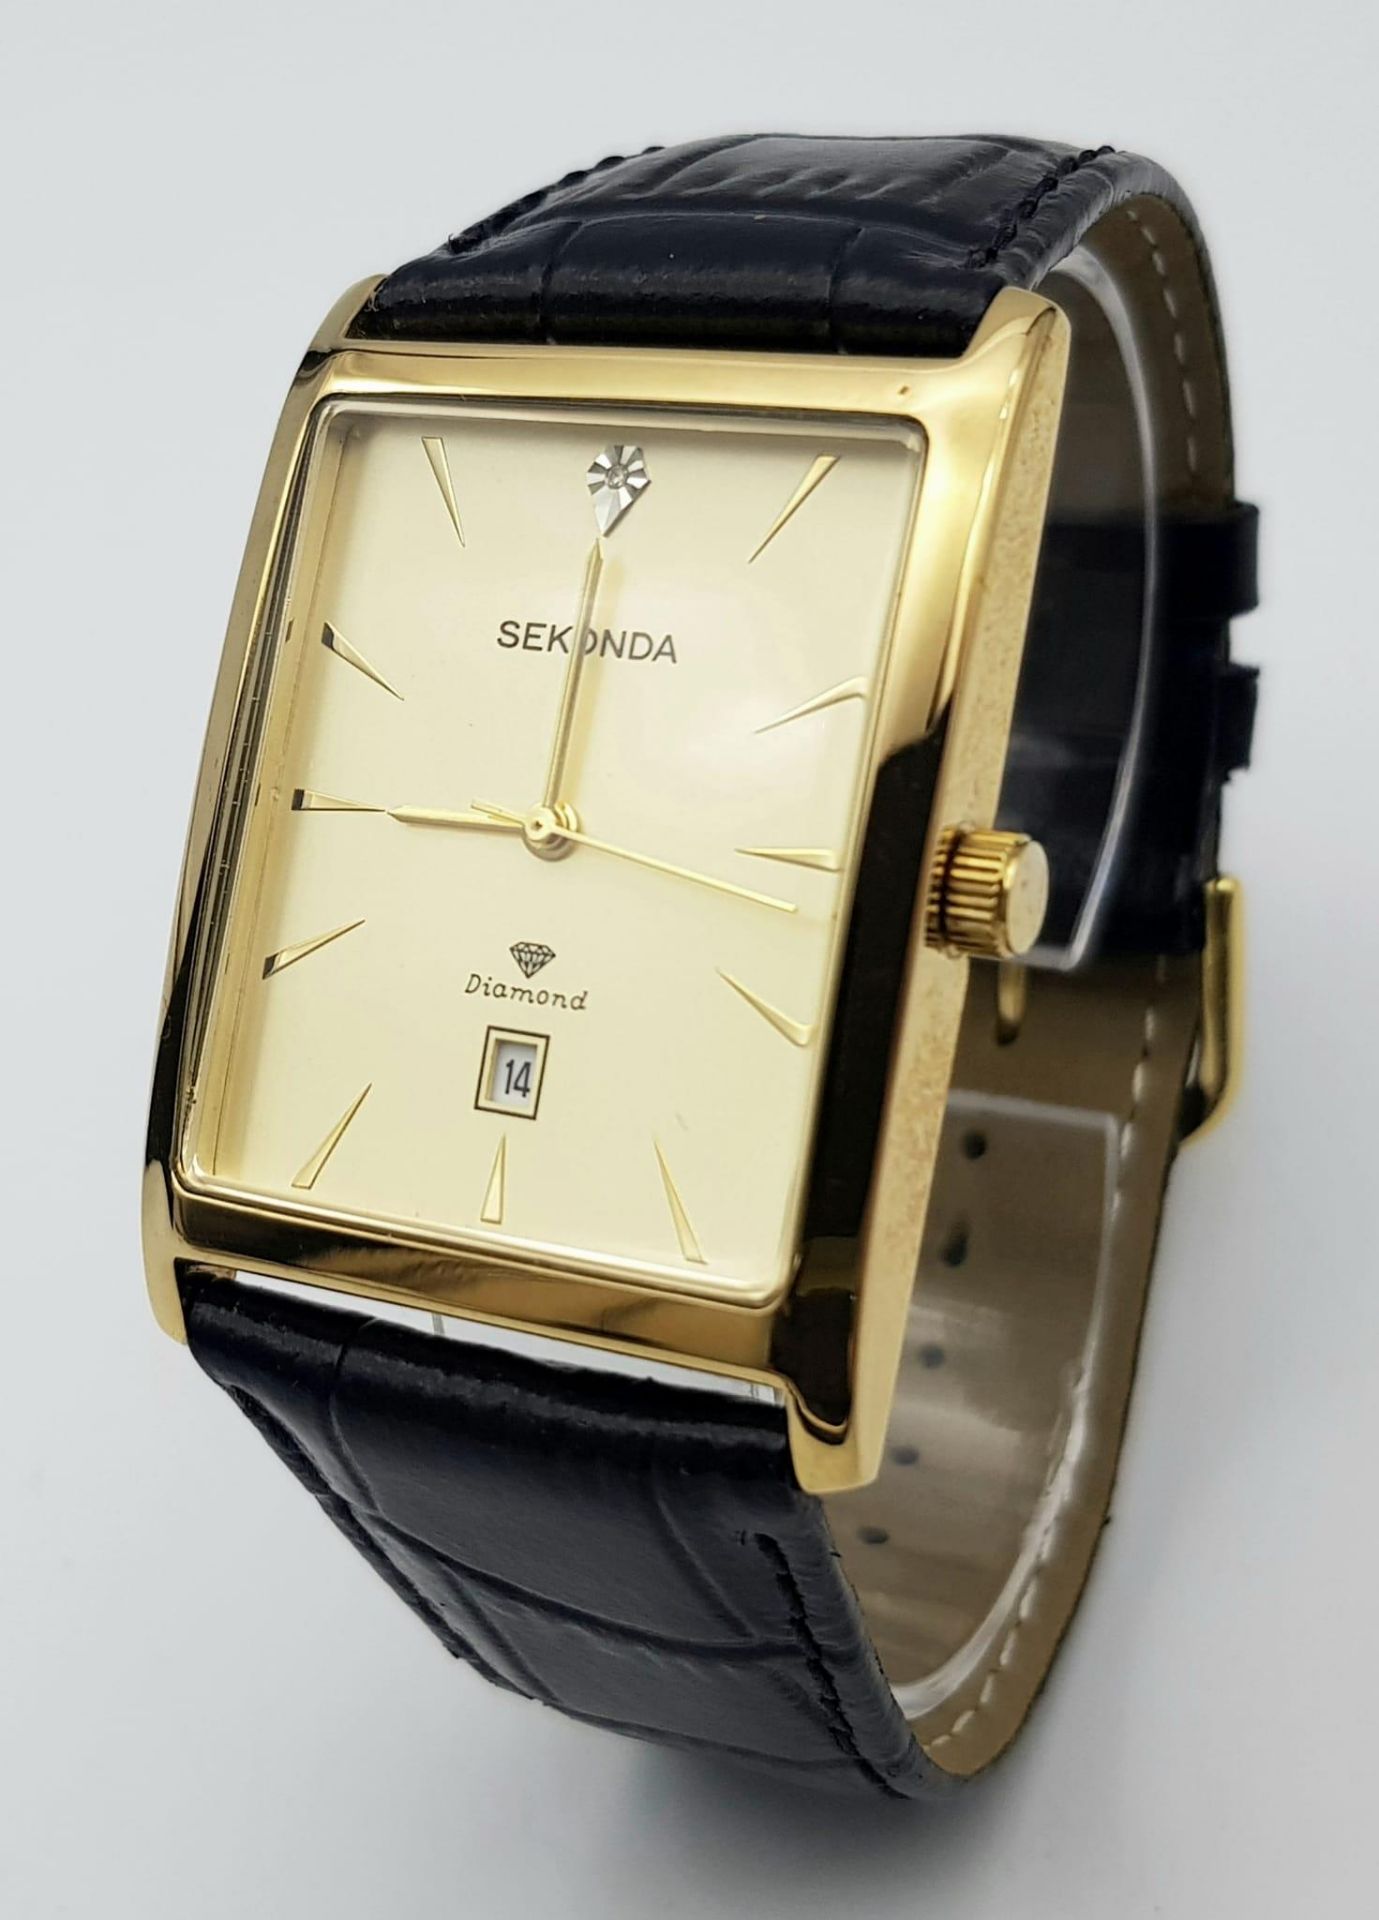 A Sekonda Diamond Gents Quartz Watch. Black leather strap. Gilded rectangular case - 32mm. Gold tone